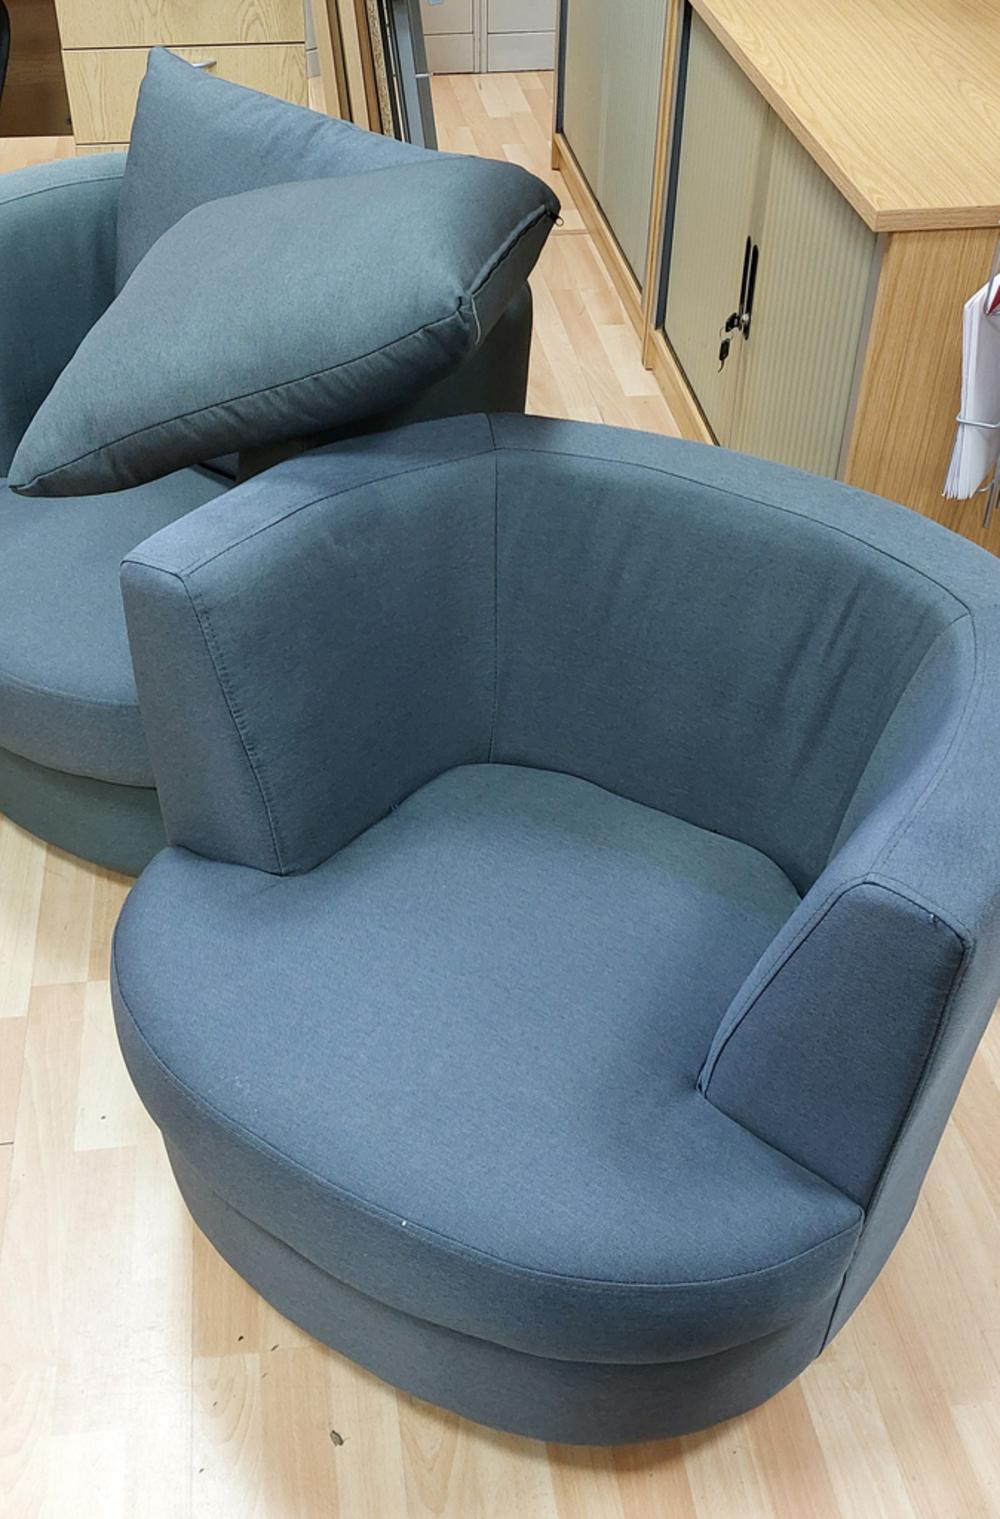 Pair of Grey Fabric Snug Swivel Tub Chairs 